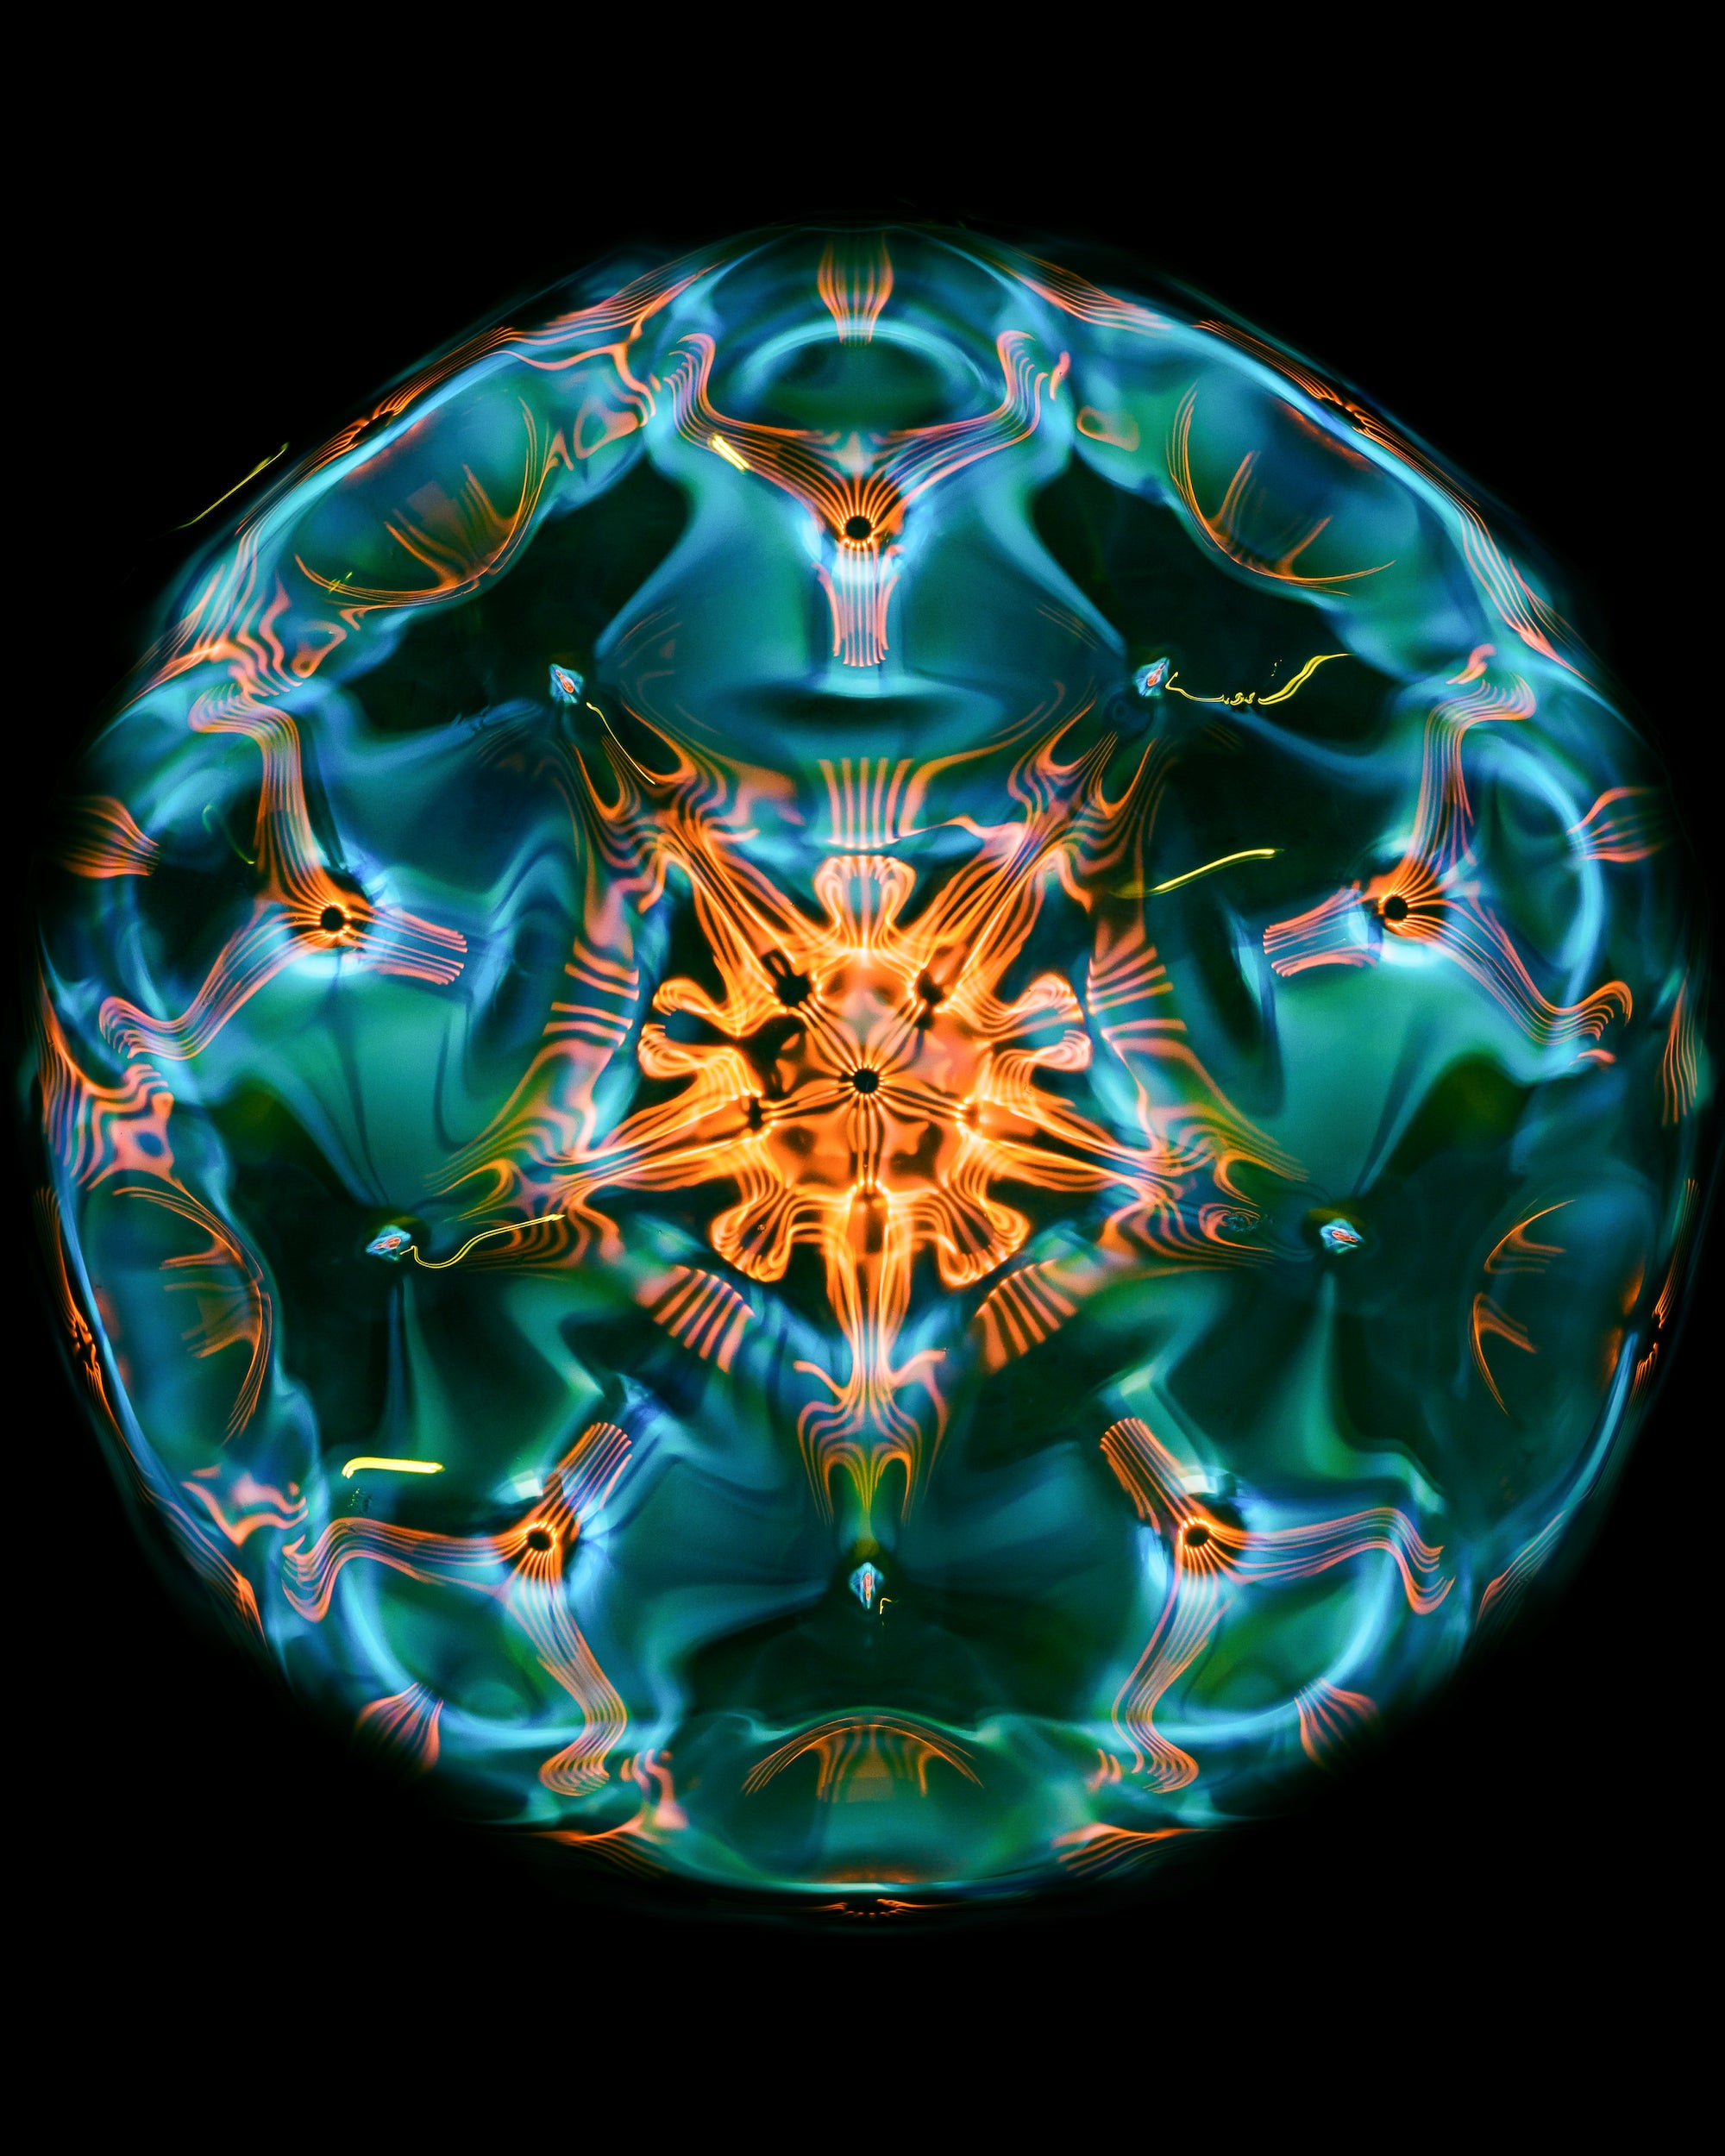 cymatics photo print 25.4Hz (Note G#) - Journey of Curiosity